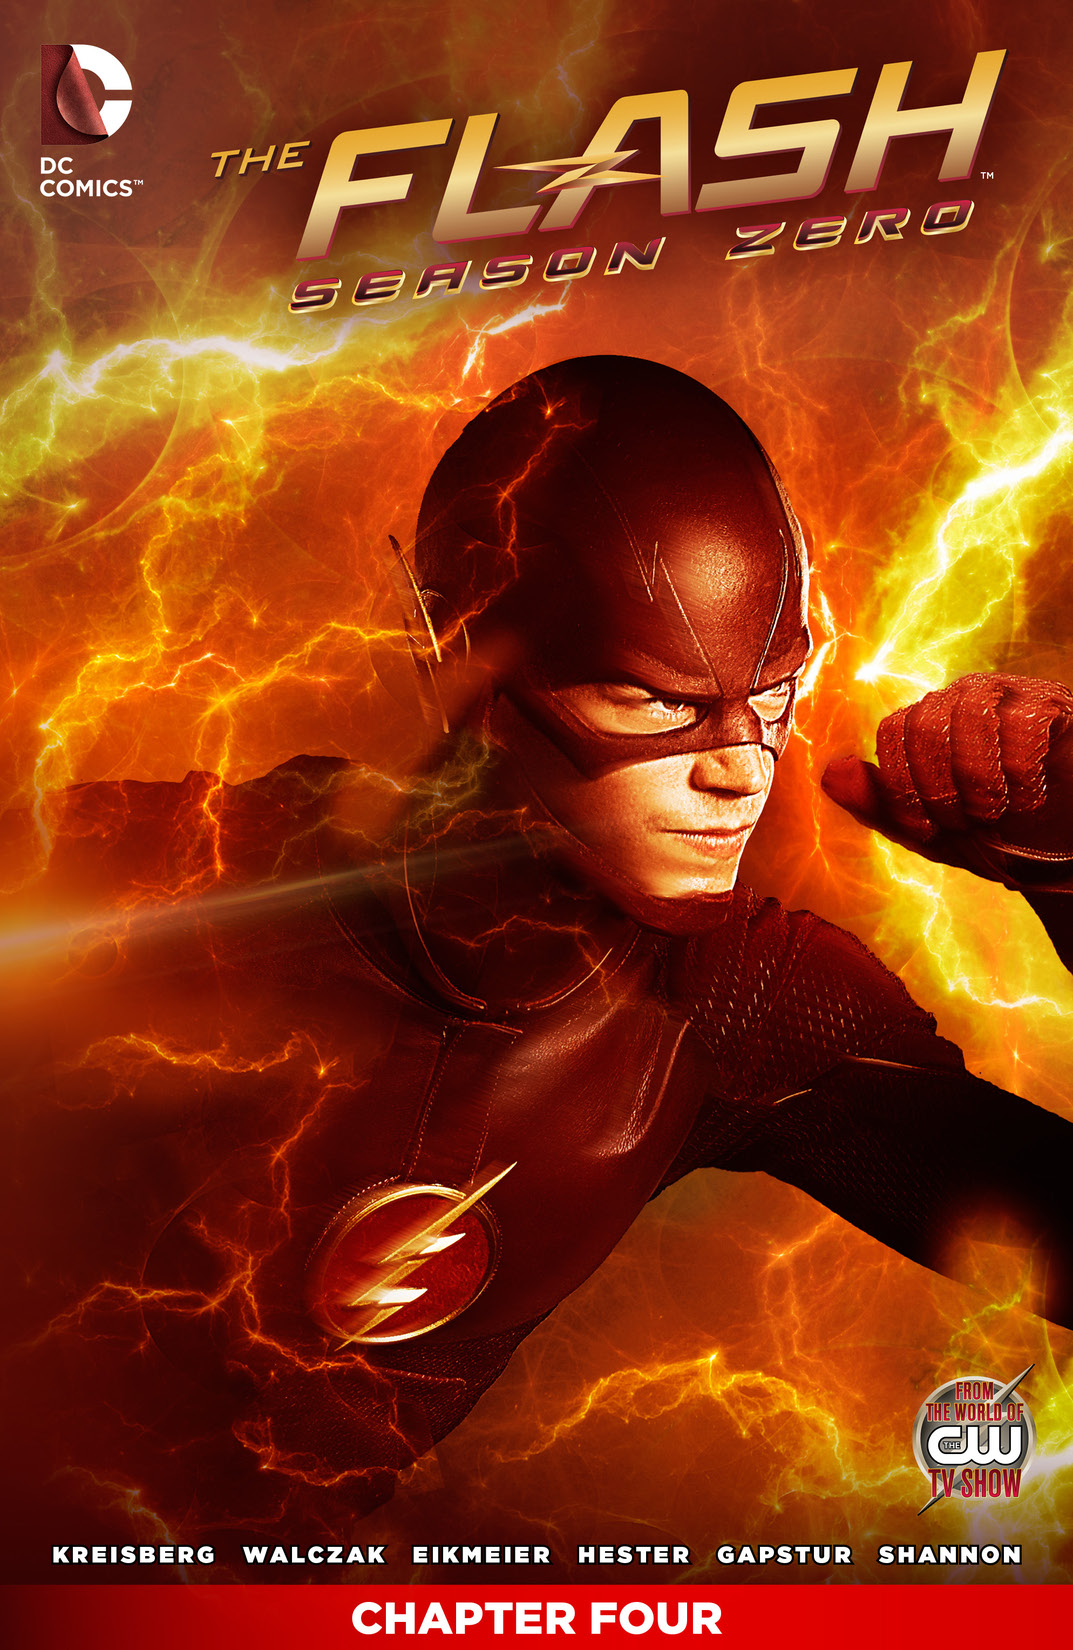 The Flash: Season Zero #4 preview images